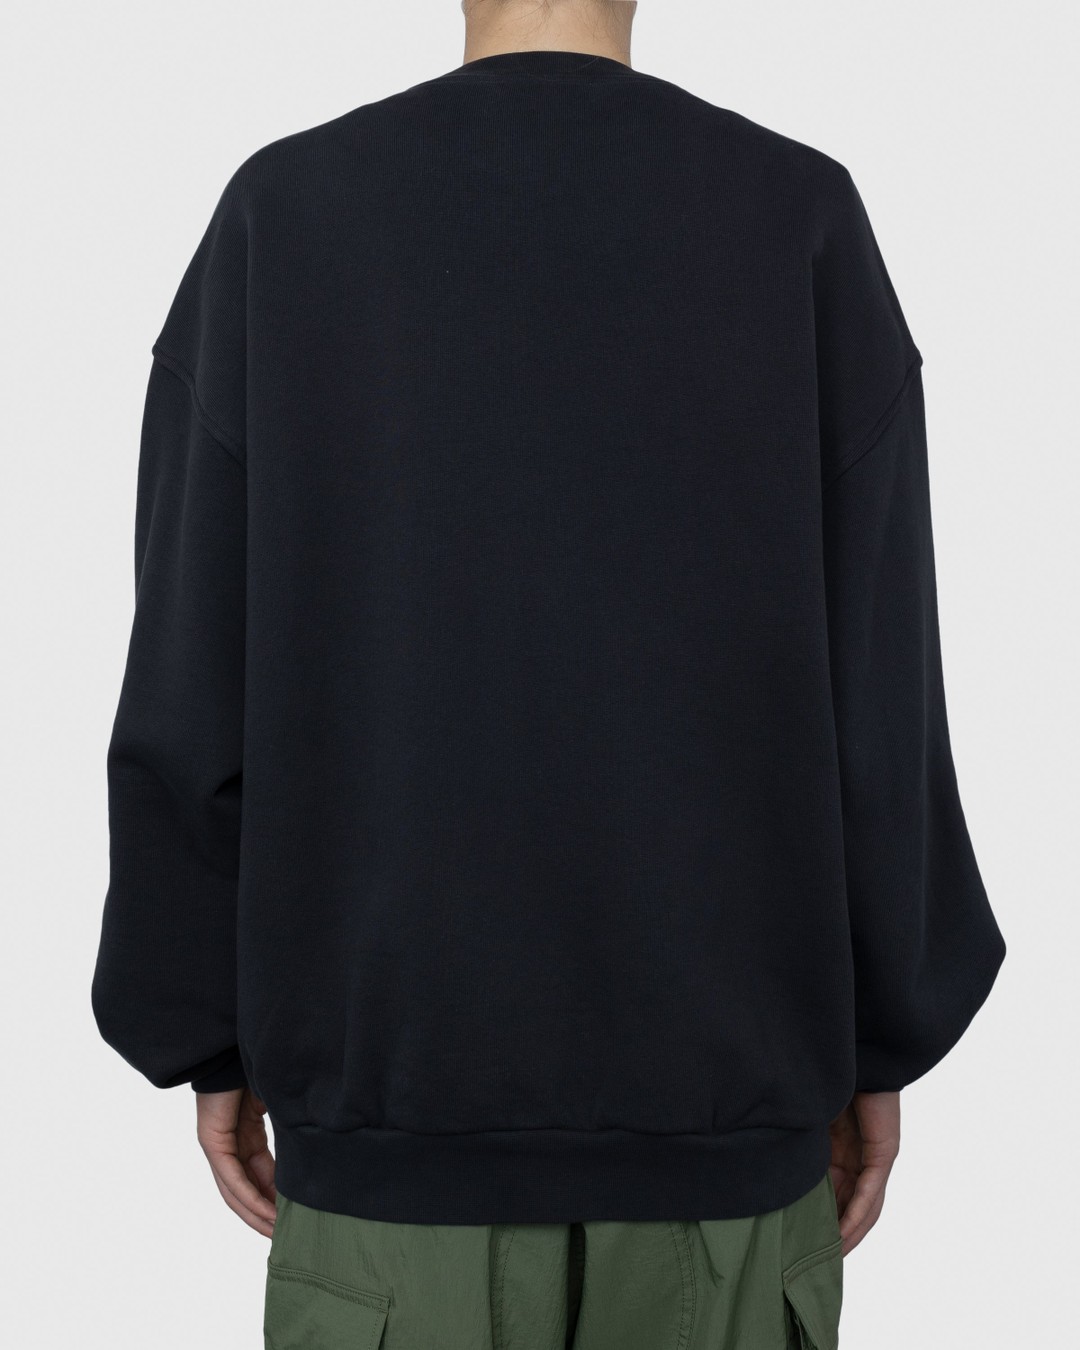 Acne Studios – Bubble Logo Crewneck Sweater Anthracite Grey - Knitwear - Black - Image 4